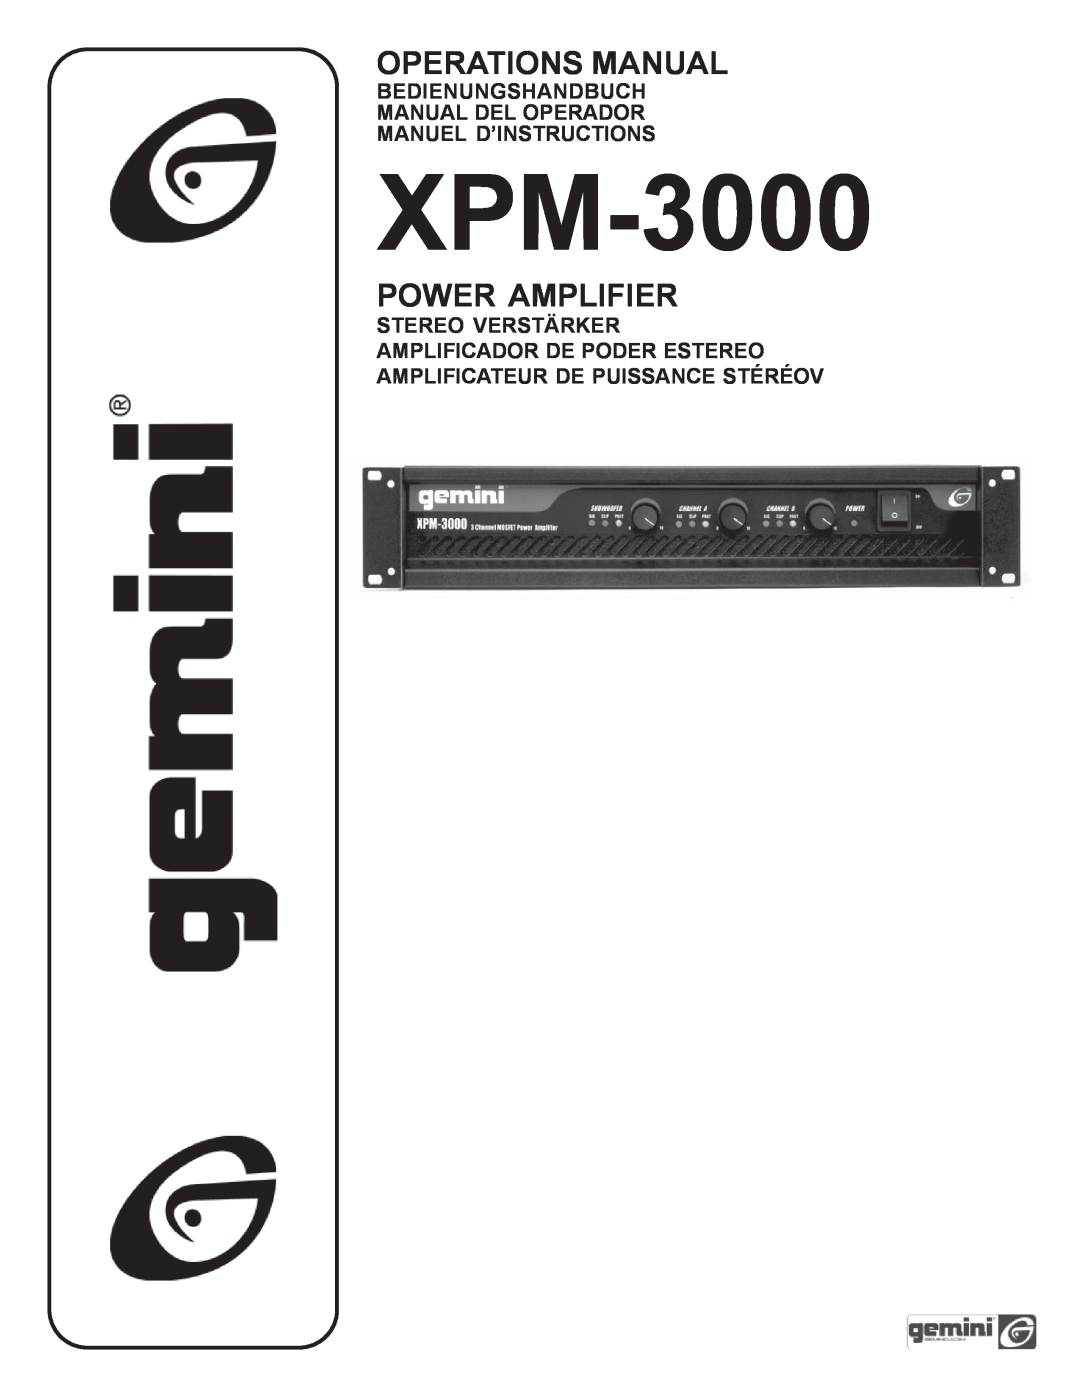 Gemini XPM-3000 manual Bedienungshandbuch Manual Del Operador, Manuel D’Instructions, Operations Manual, Power Amplifier 